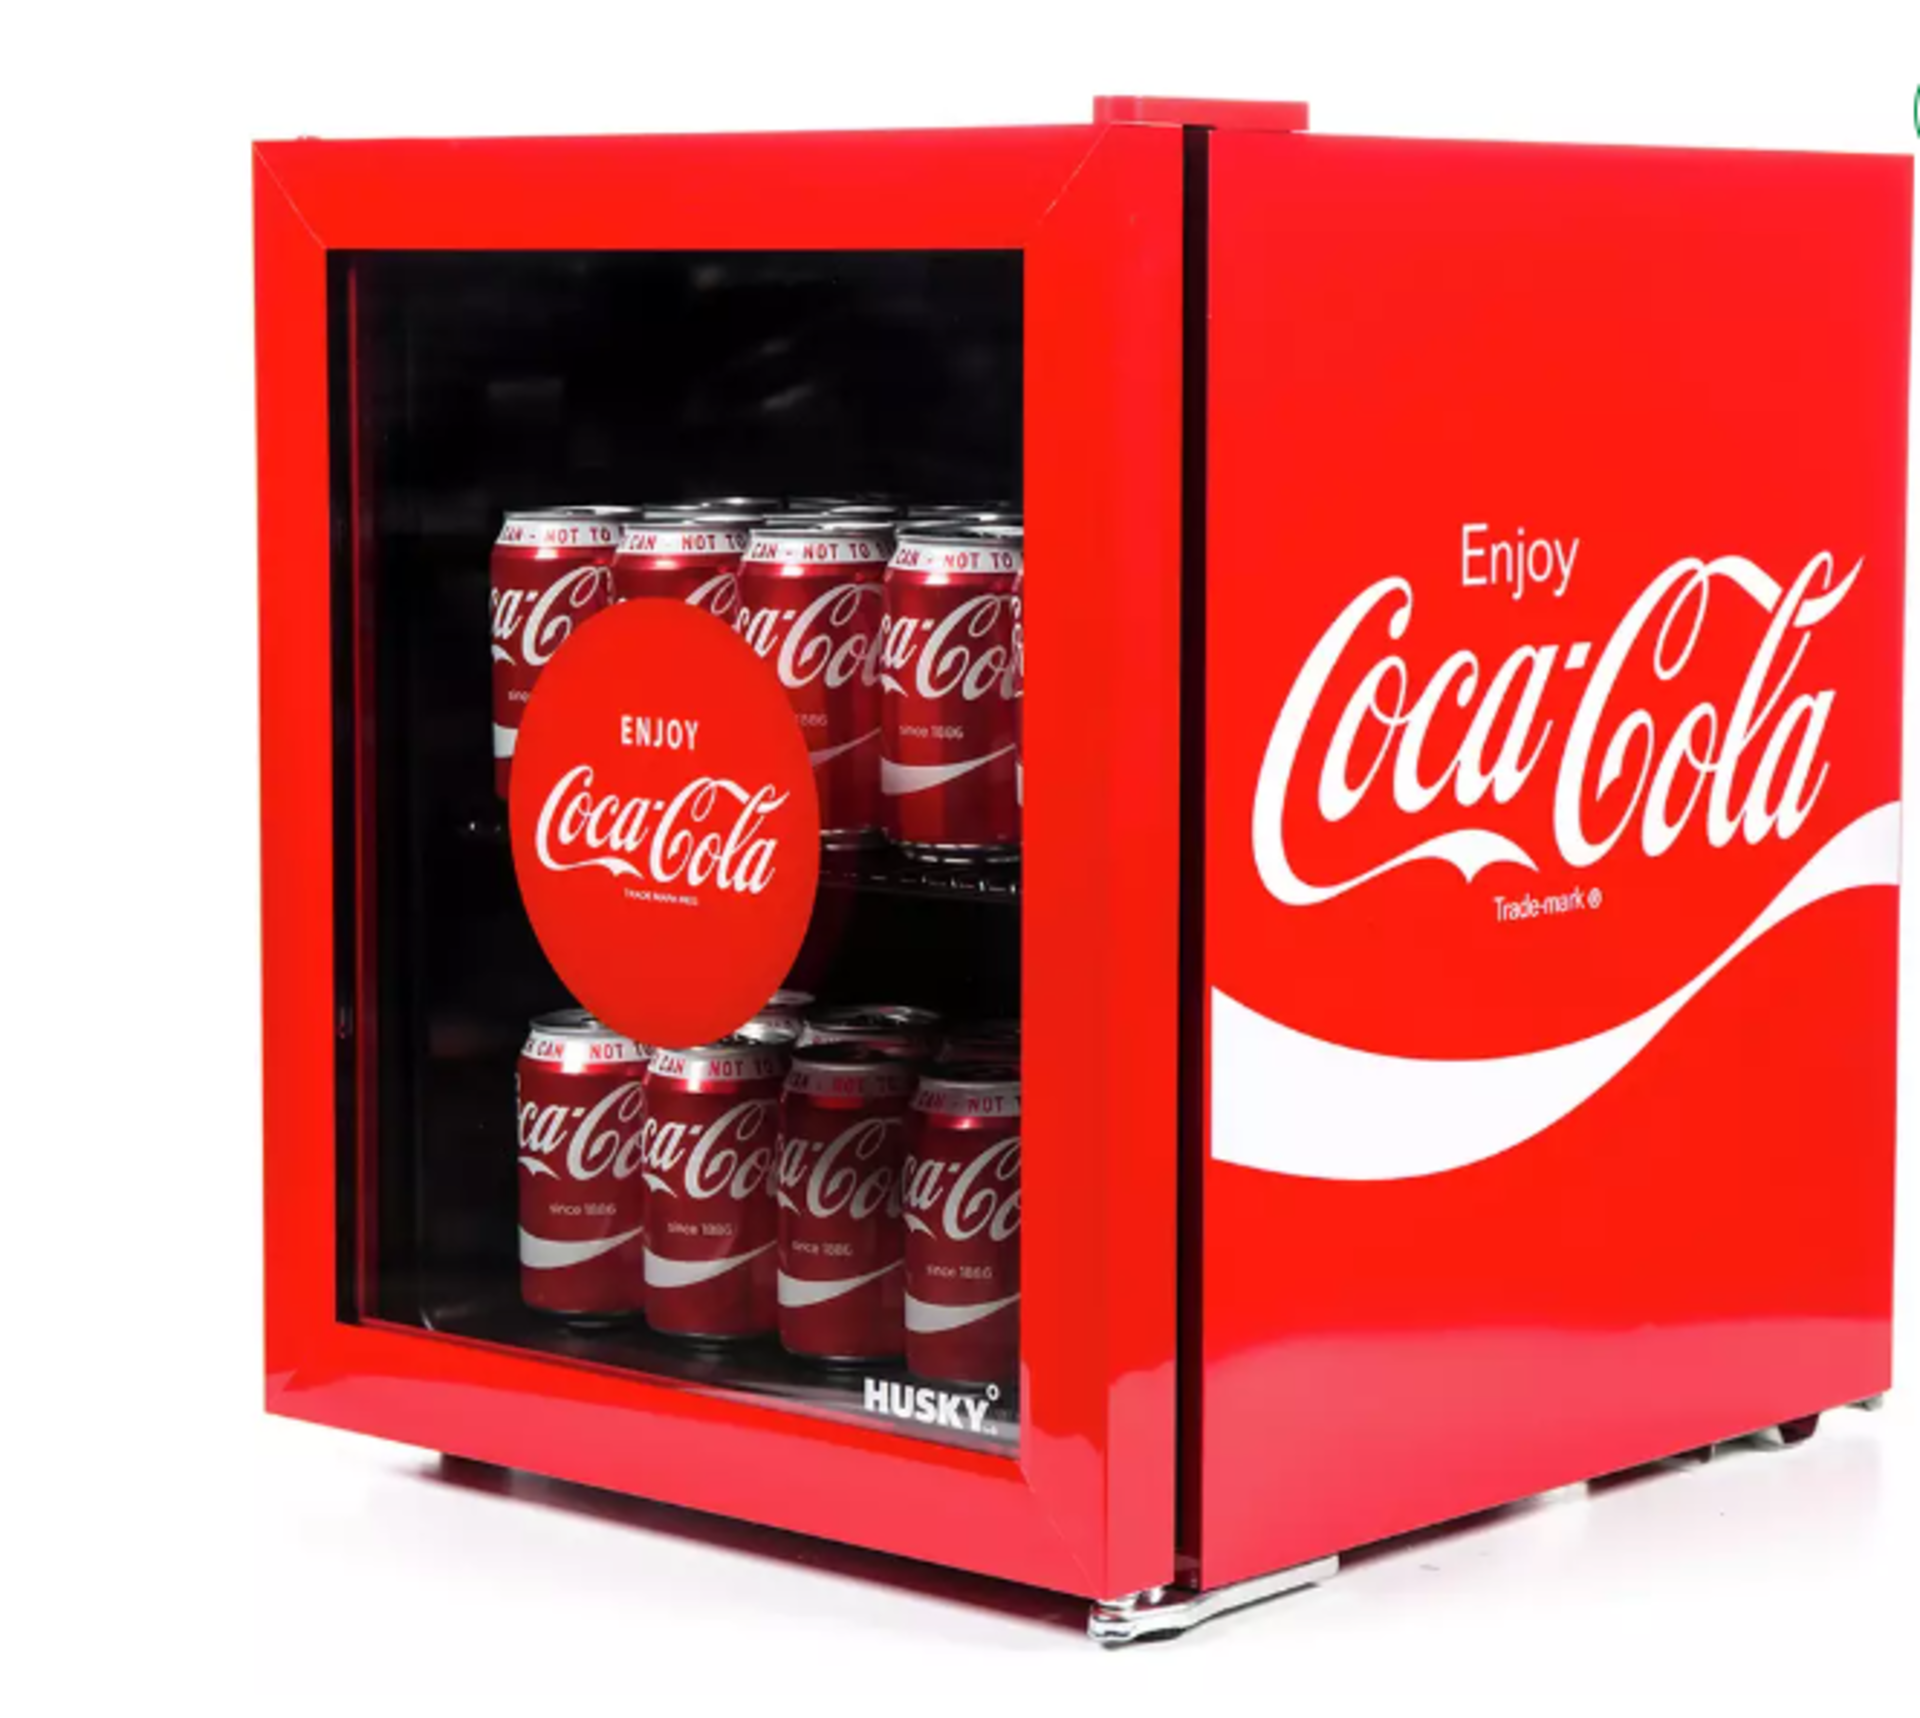 Husky Coca-Cola 48 Litre Drinks Cooler - Red. - ER47. RRP £230.00. This Husky Coca-Cola drinks